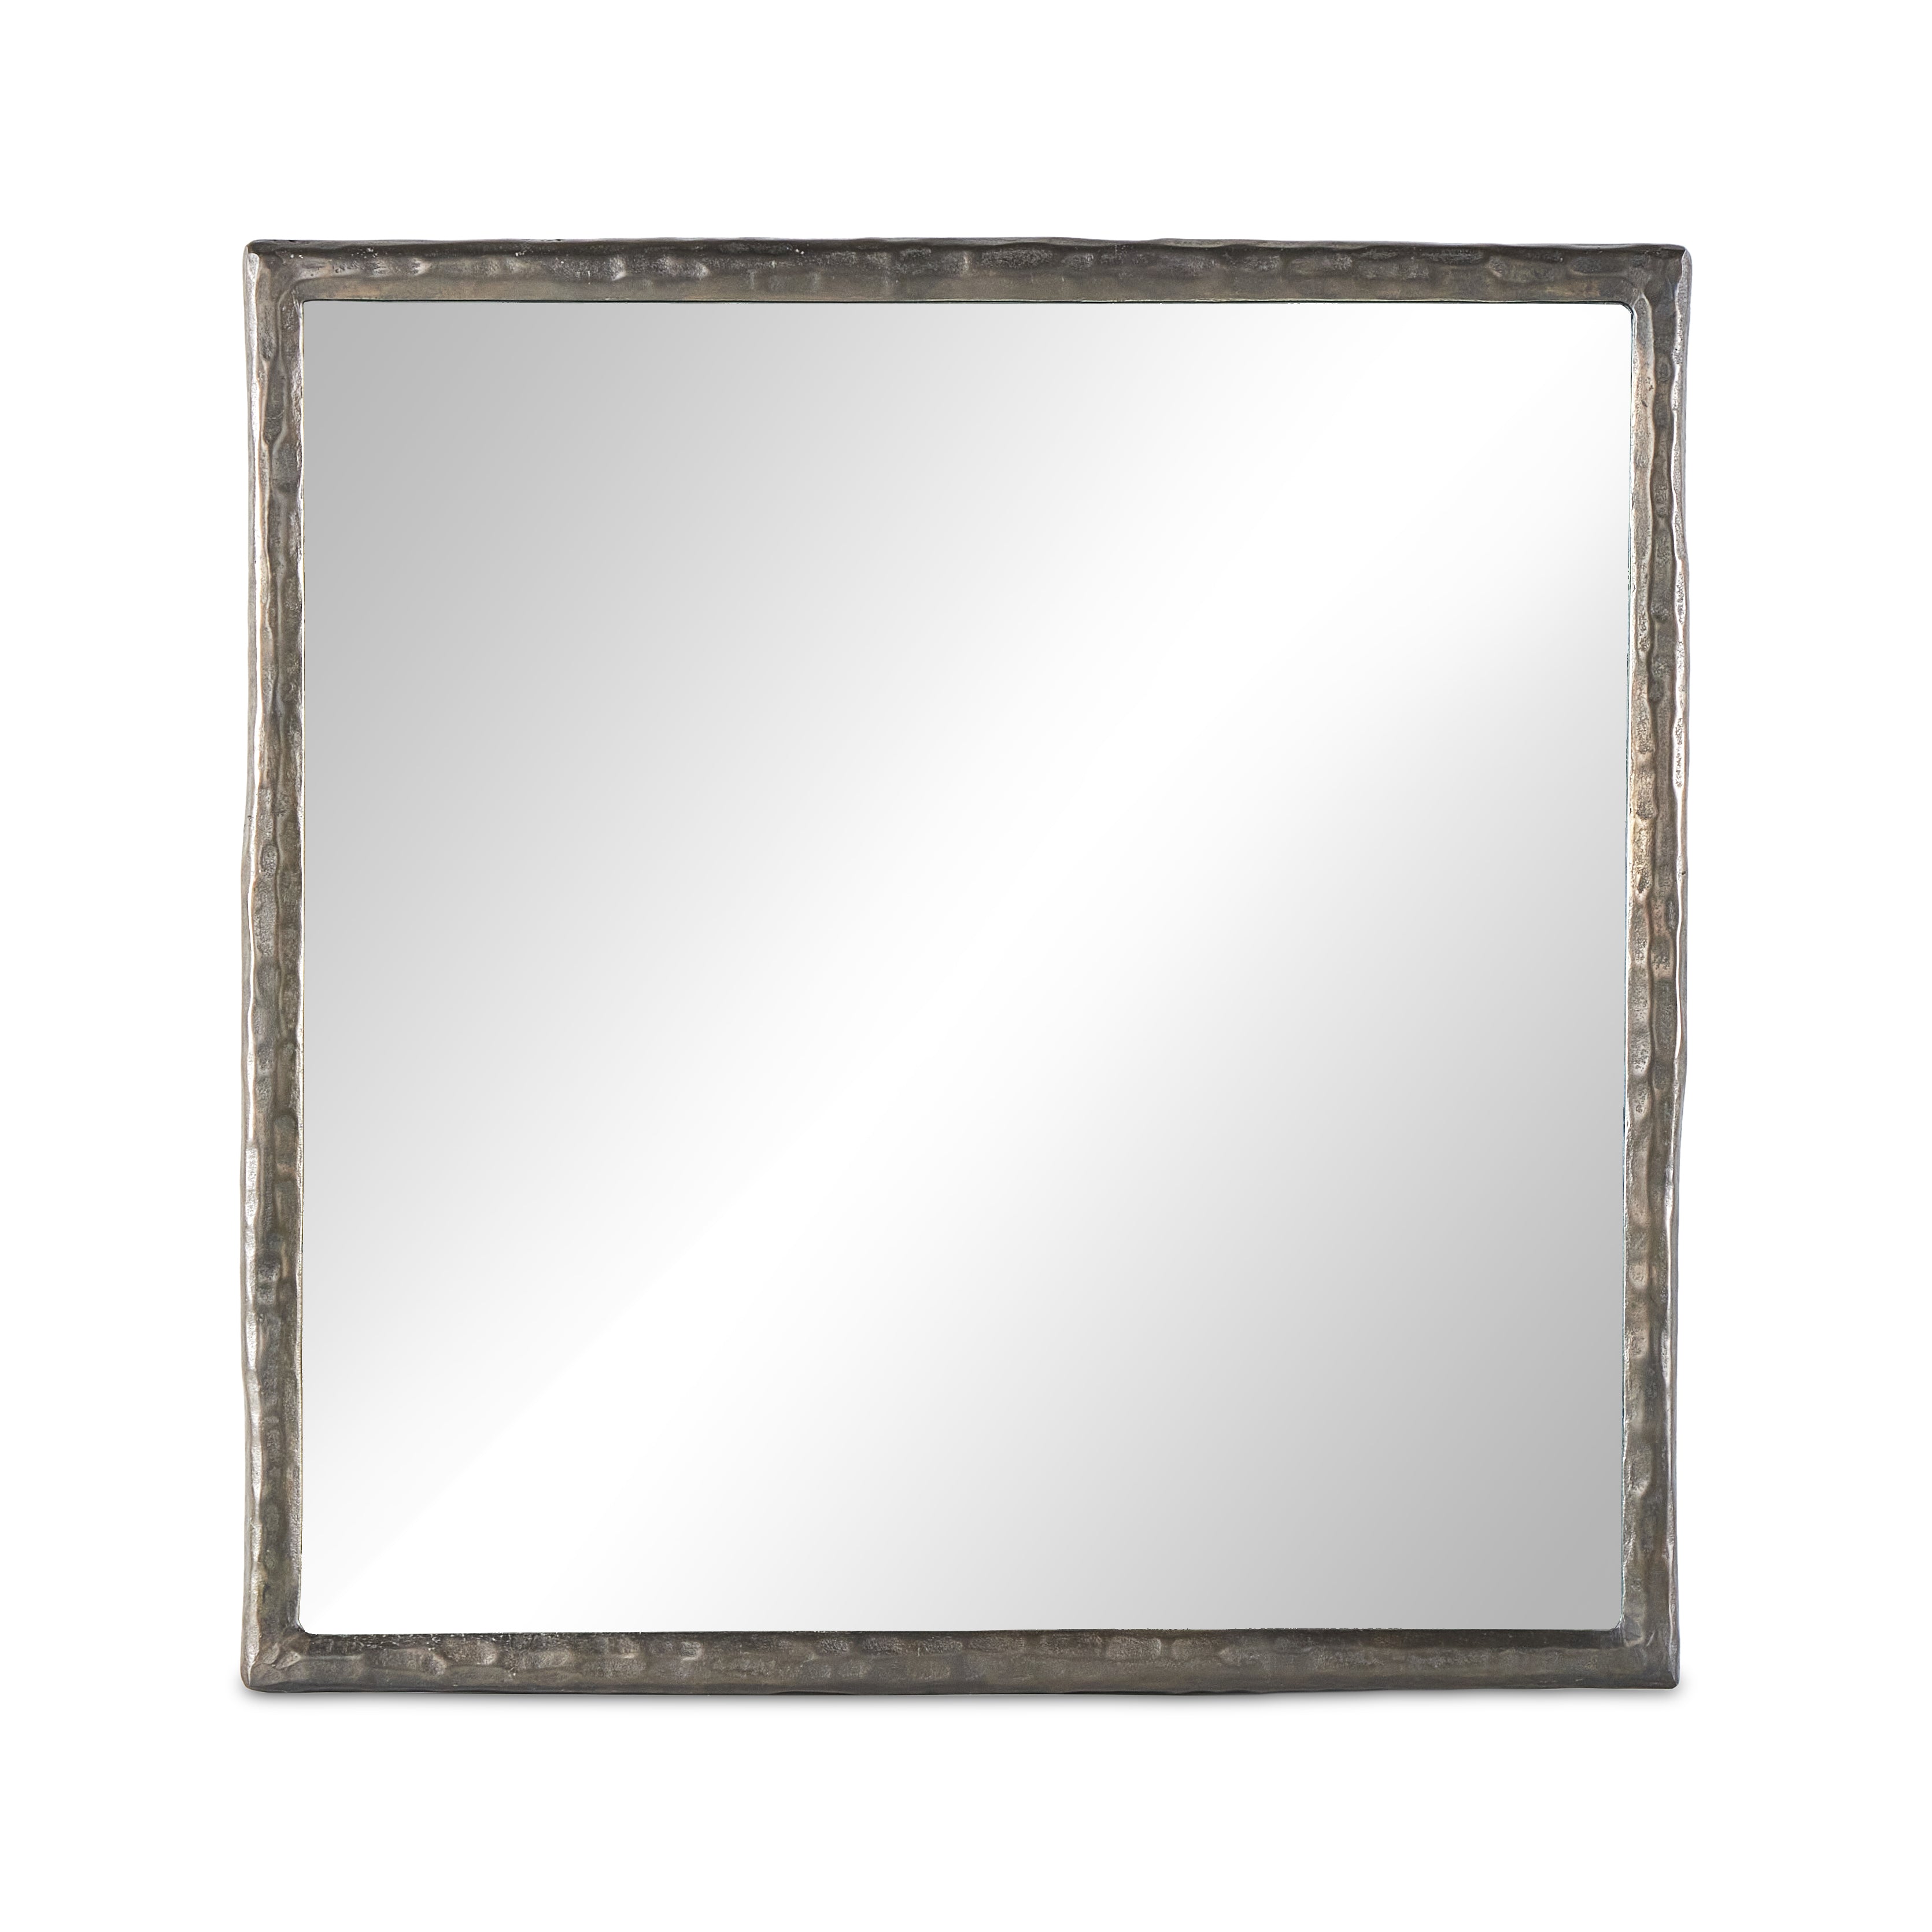 Langford Wall Mirror-Smoked Nickel - StyleMeGHD - 